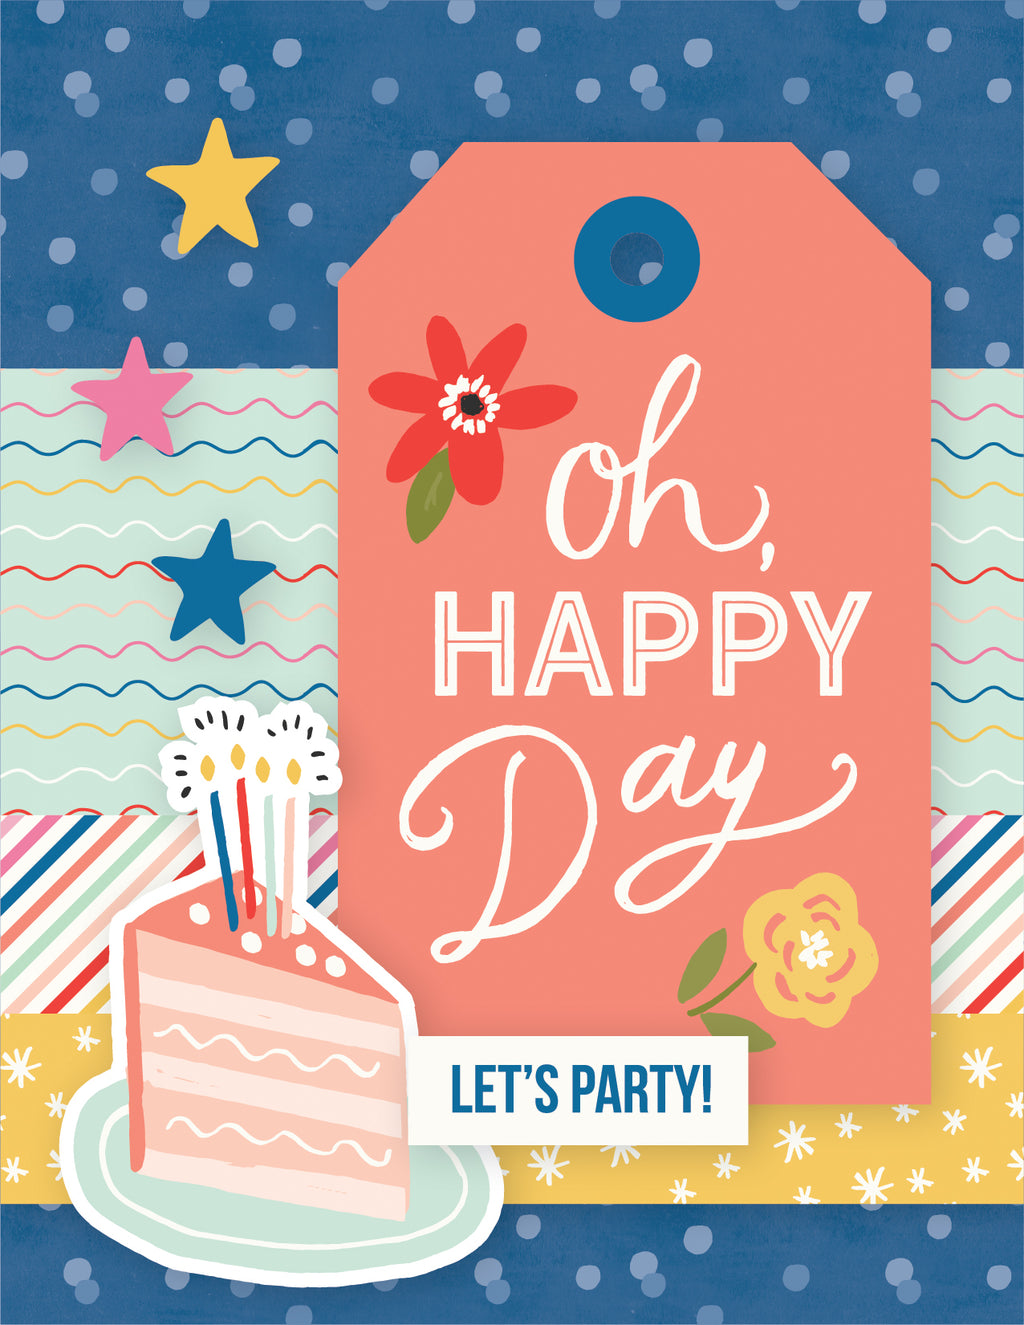 Celebrate! - Simple Cards Card Kit